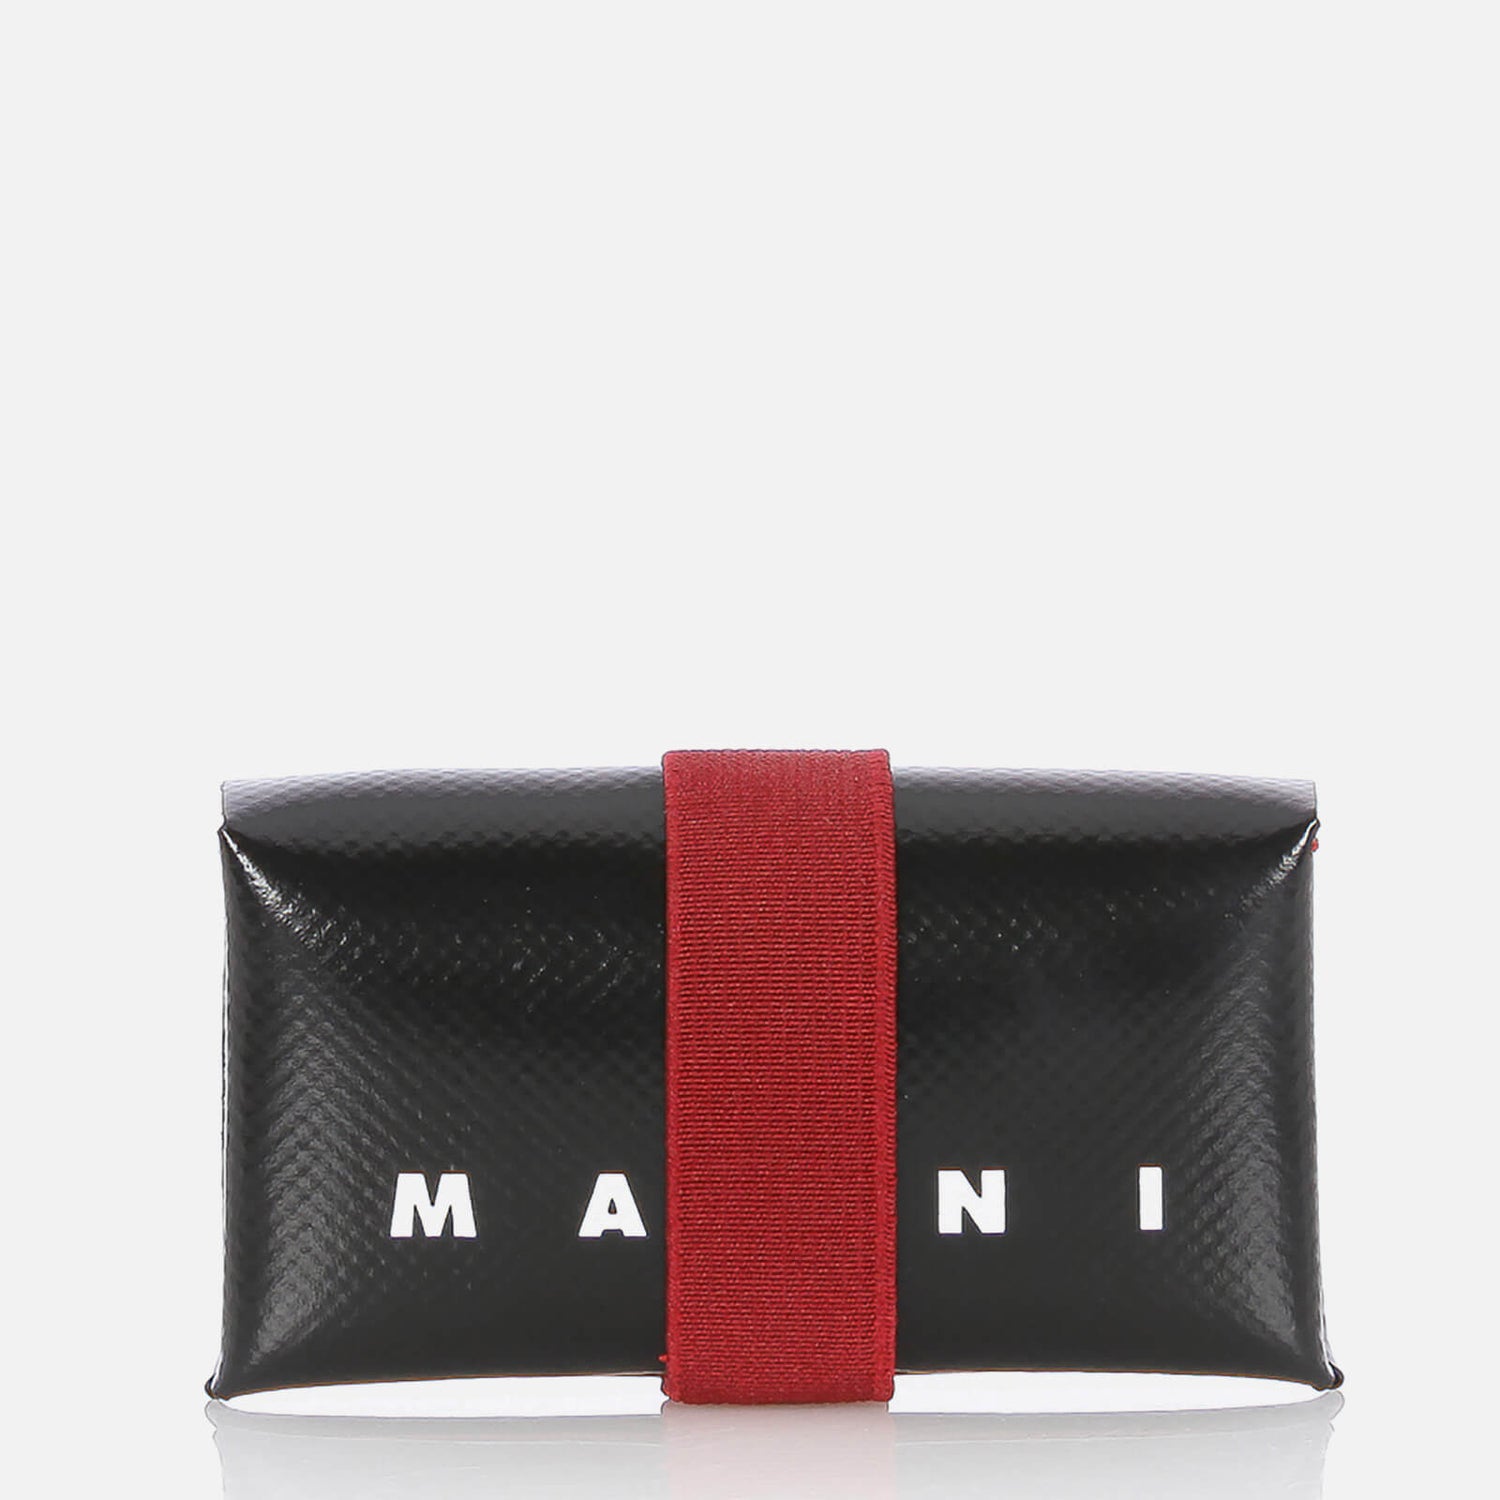 Marni Men's Tribeca Wallet - Black/Eggplant/Red